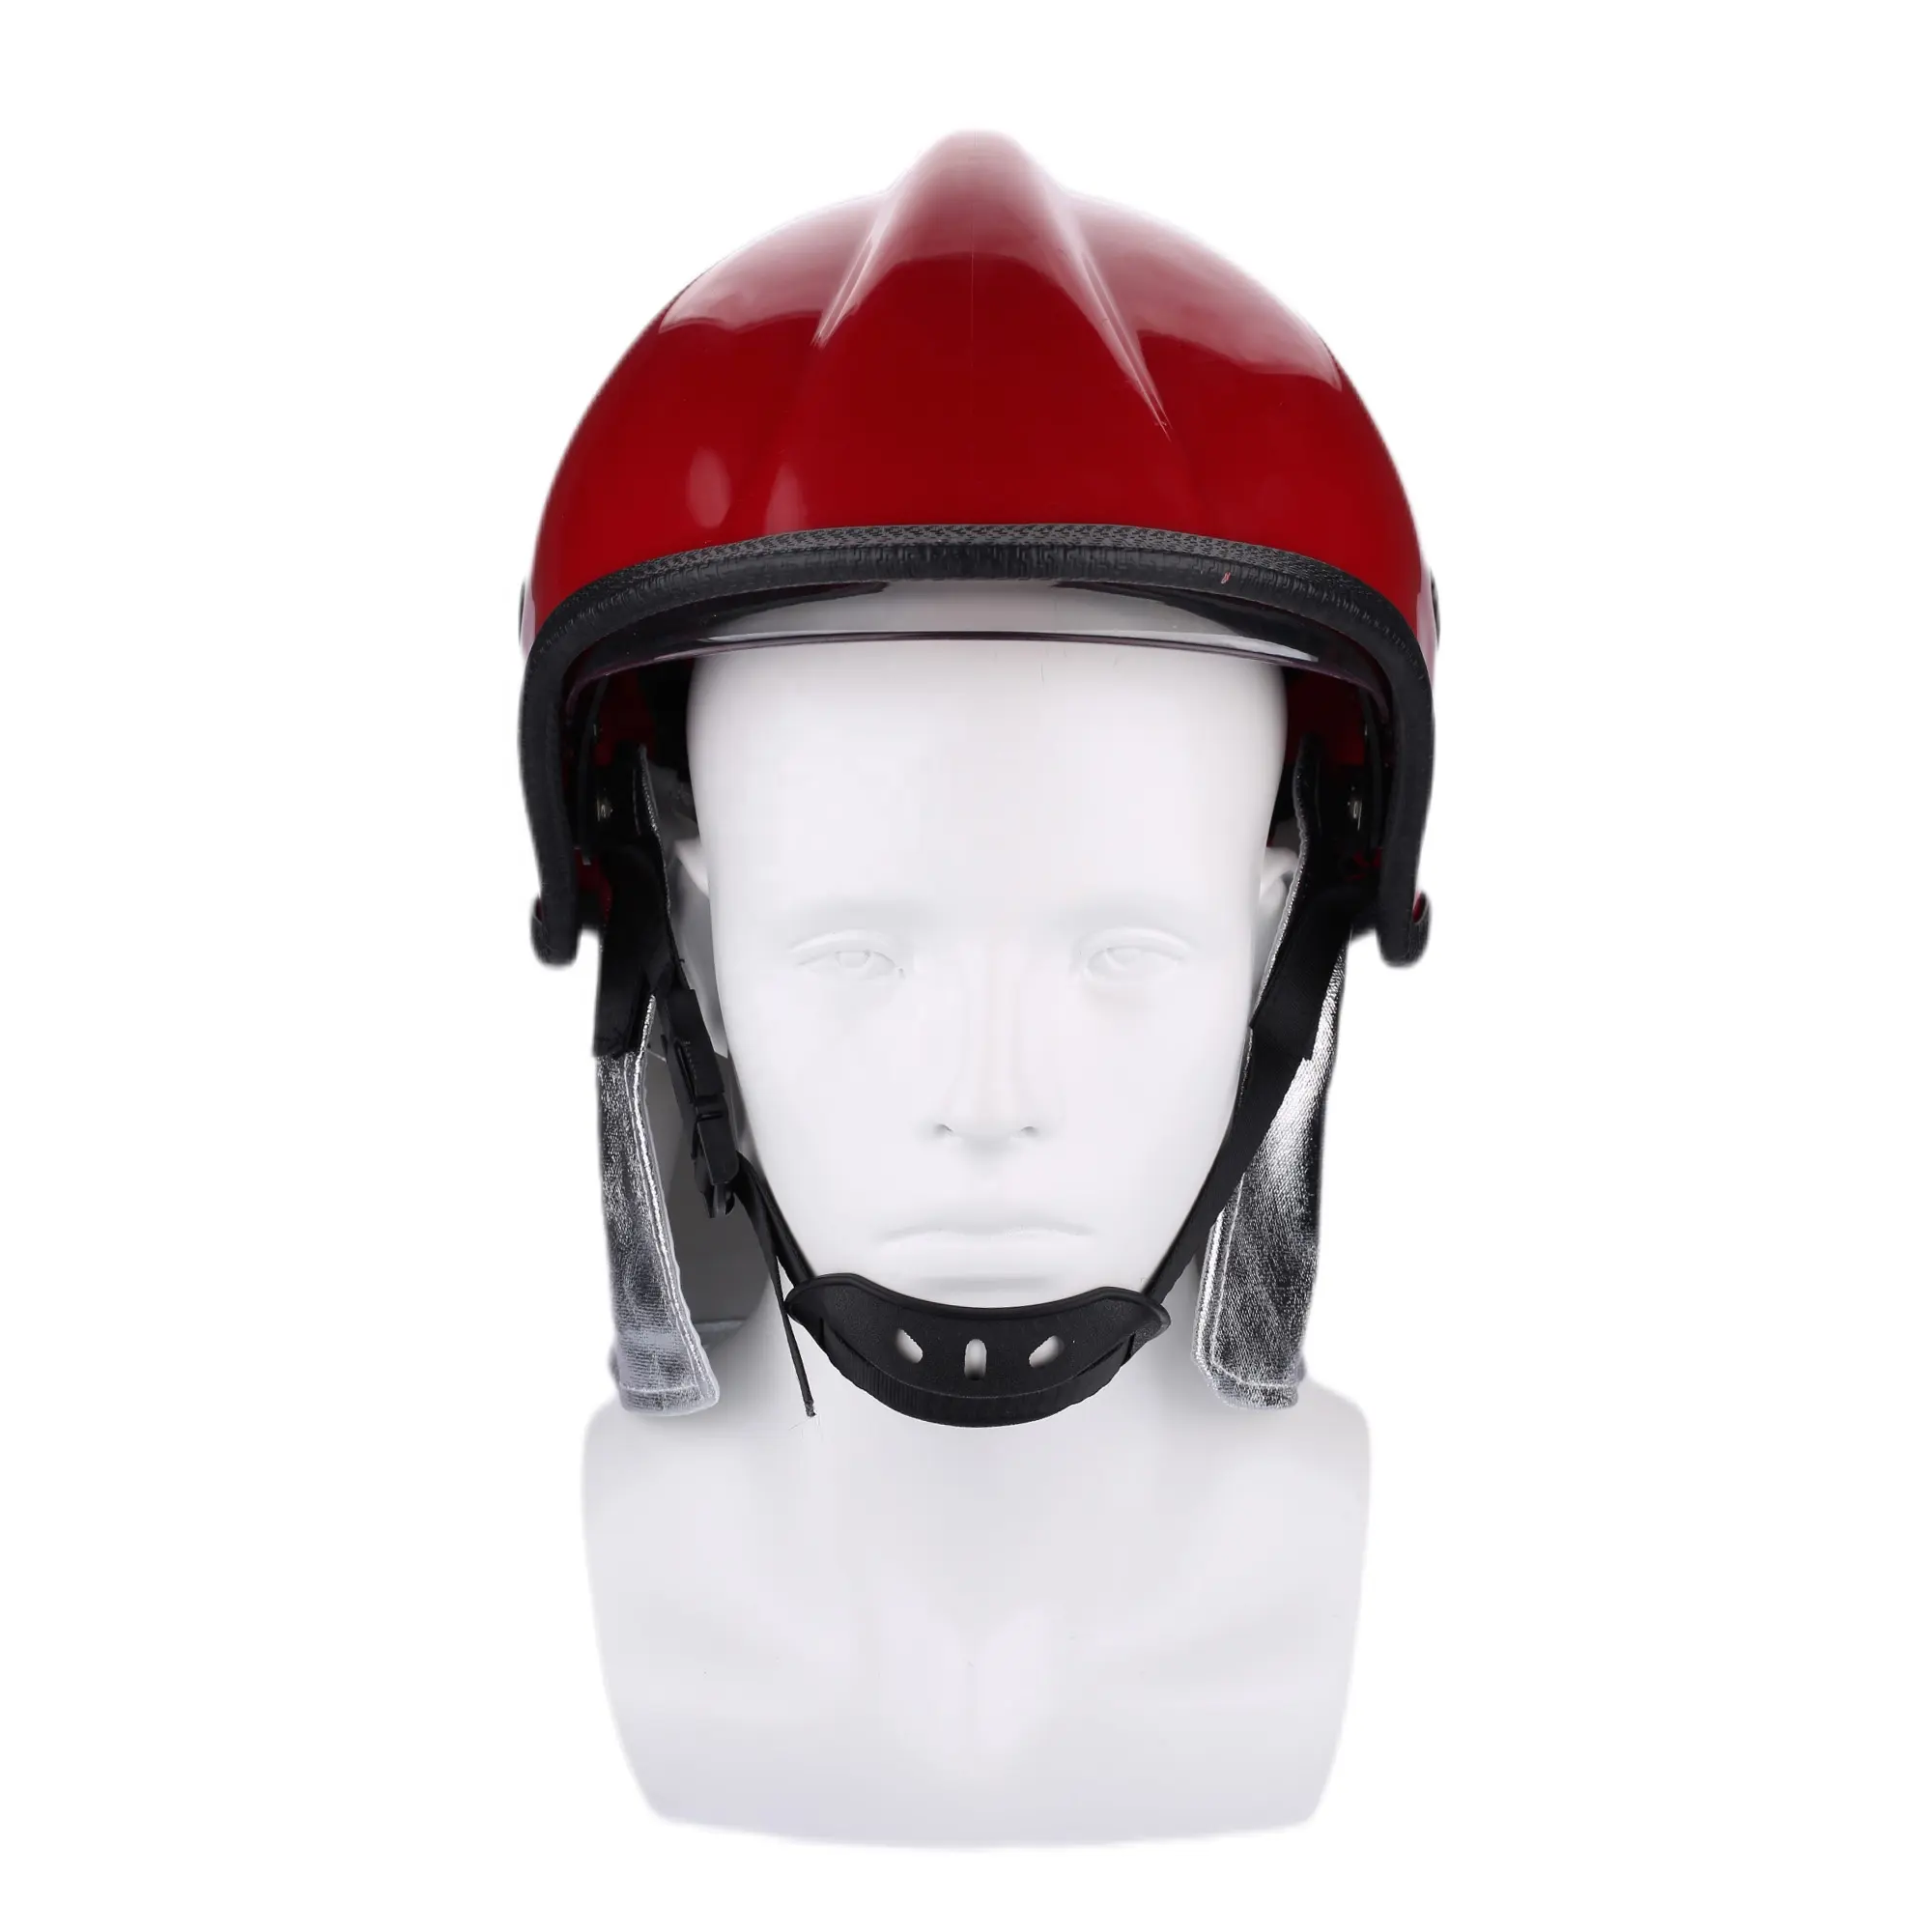 Fireman helmet Protective Good Quality Firefighter Using American Type Fire Helmet